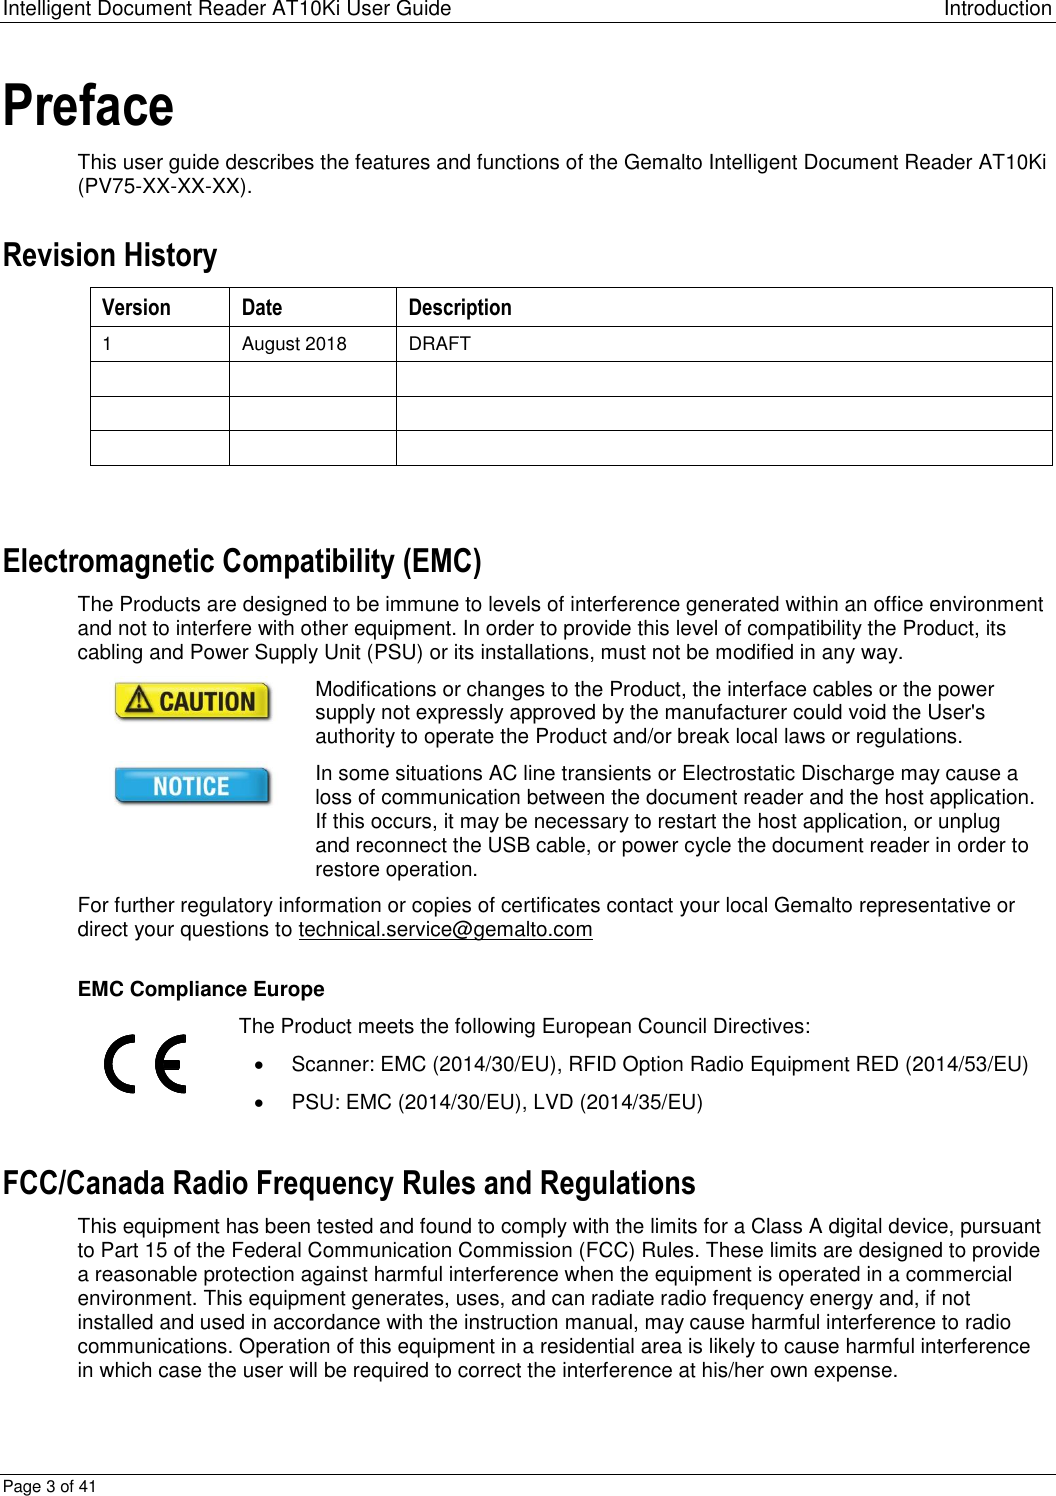 Page 3 of Thales DIS USA PR01523 ation Scanner User Manual